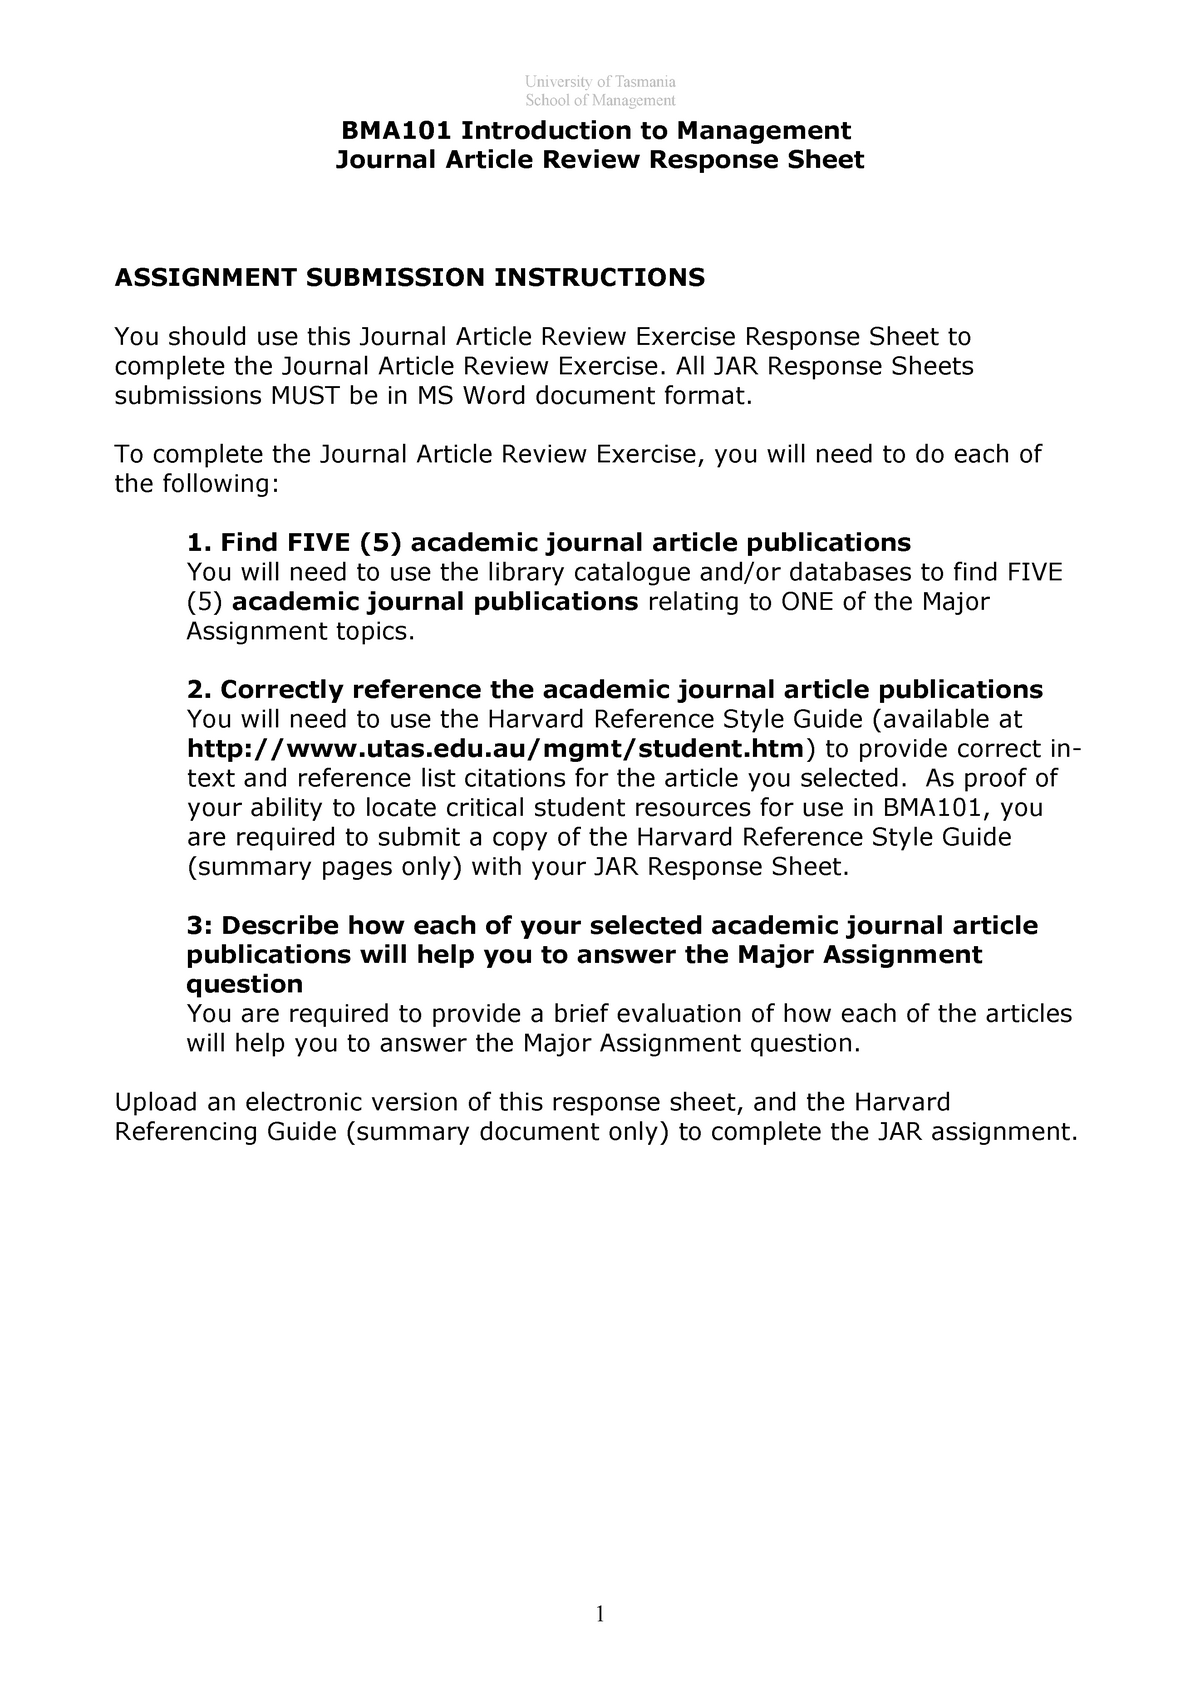 Seminar assignments - Journal article review assessment piece